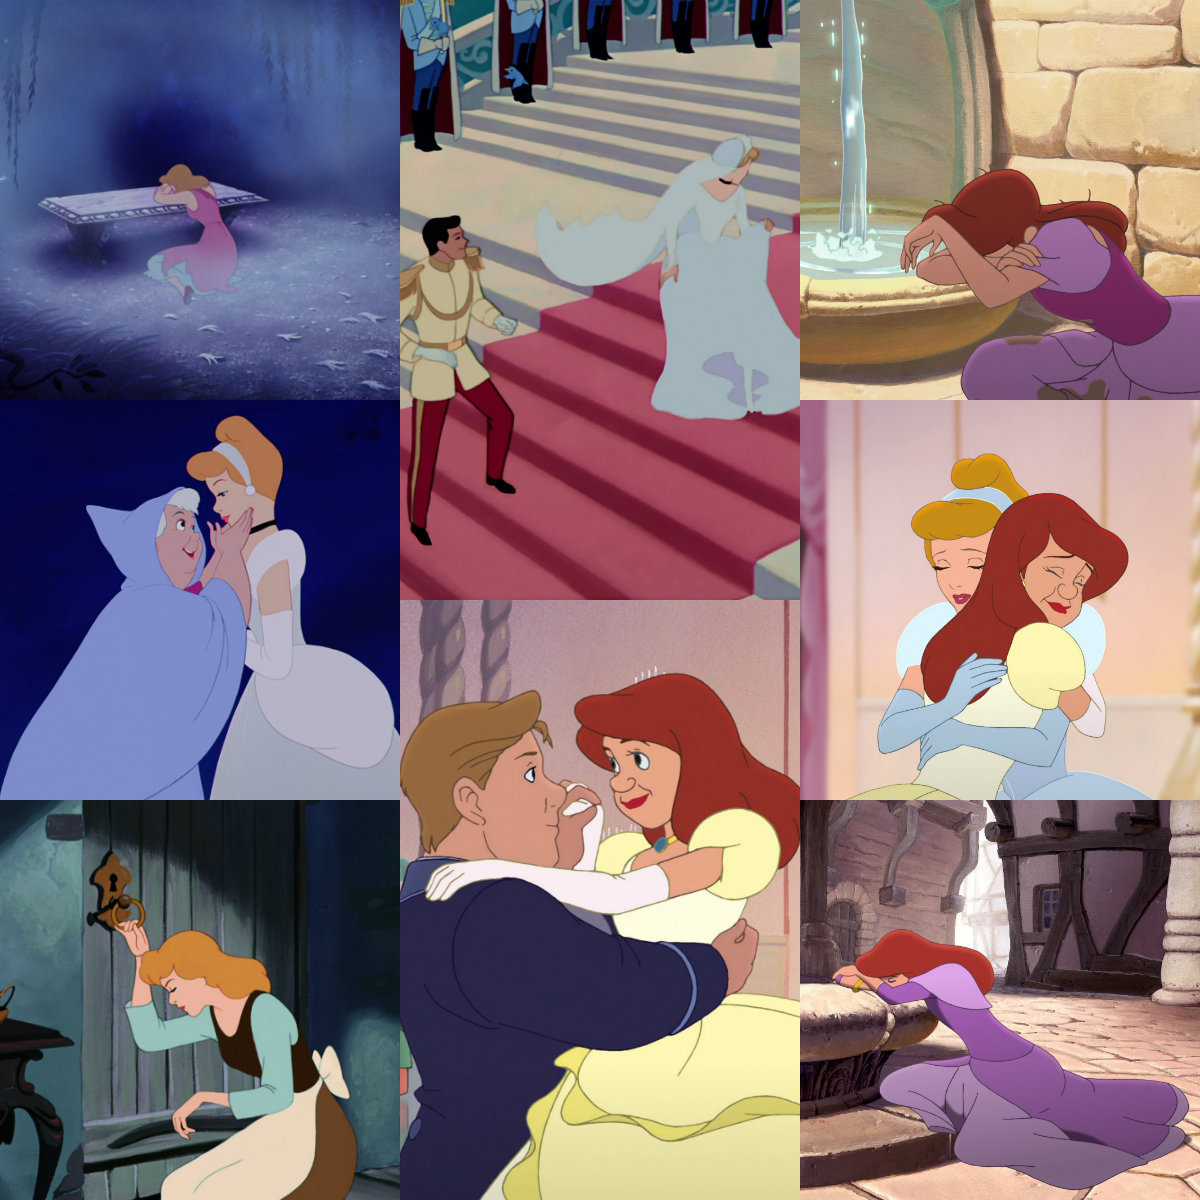 Porn Sleeping Disney Princess